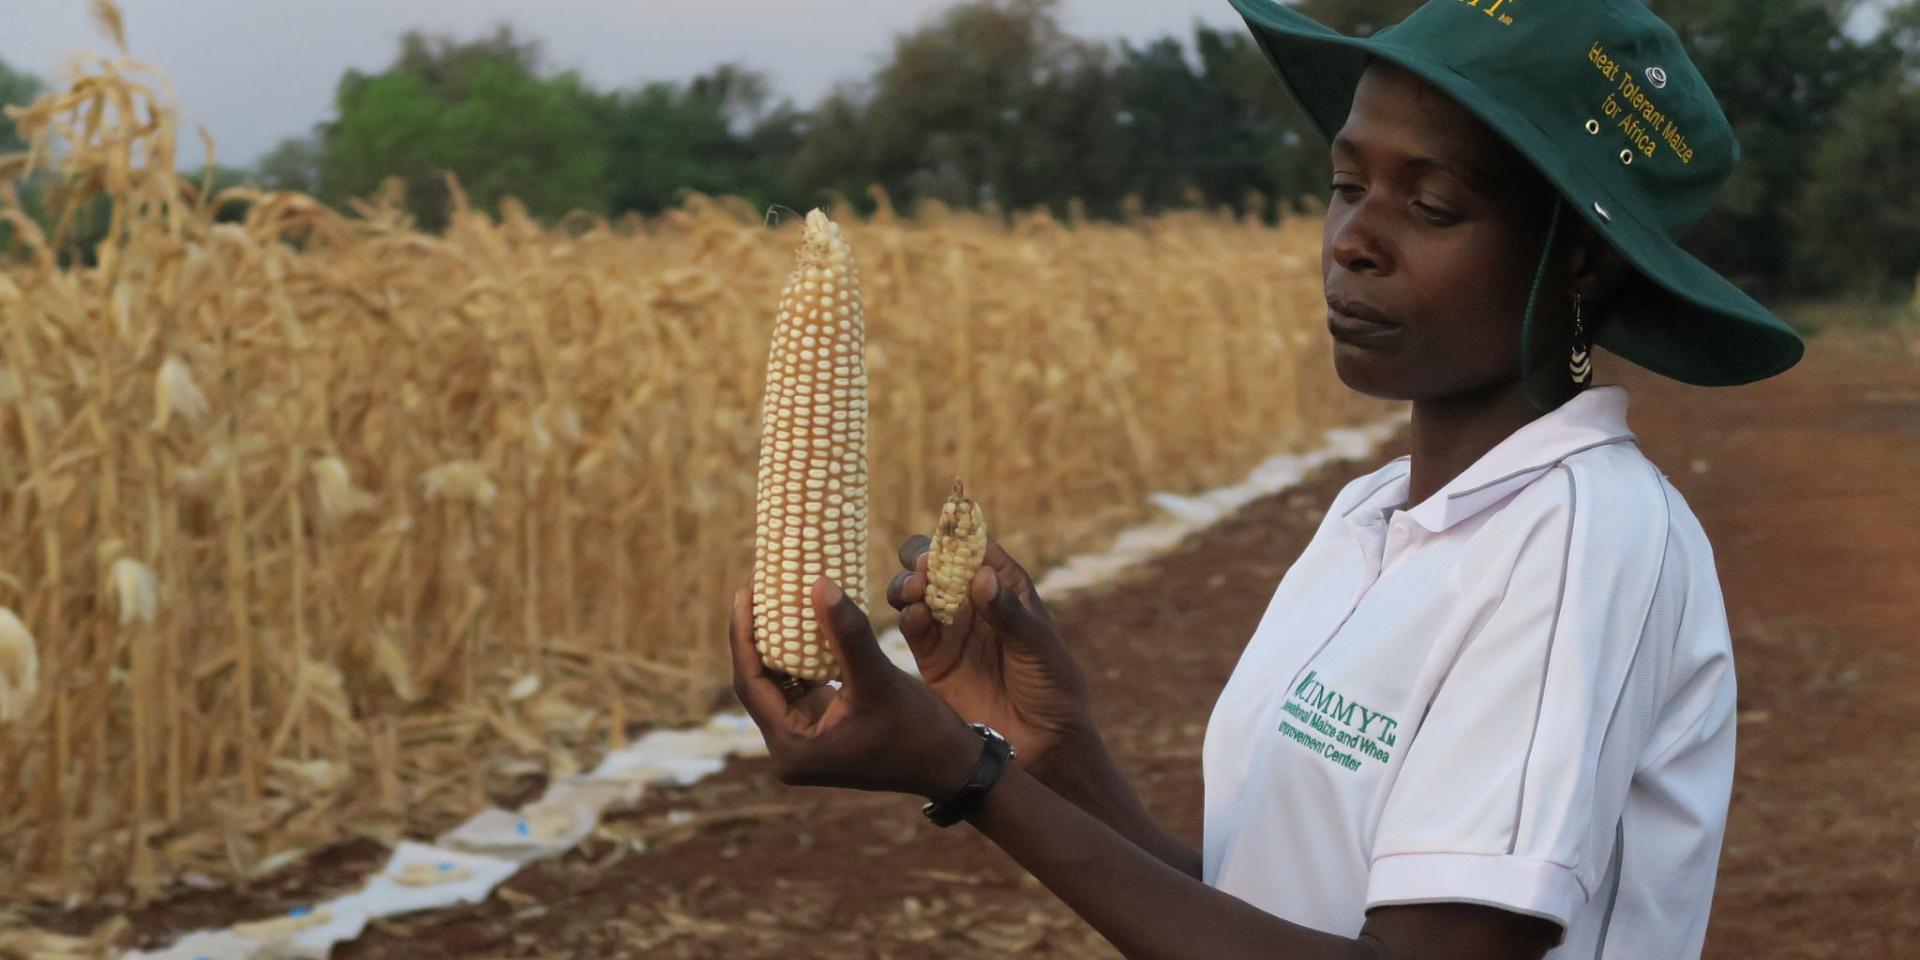 Woman in a maize field 